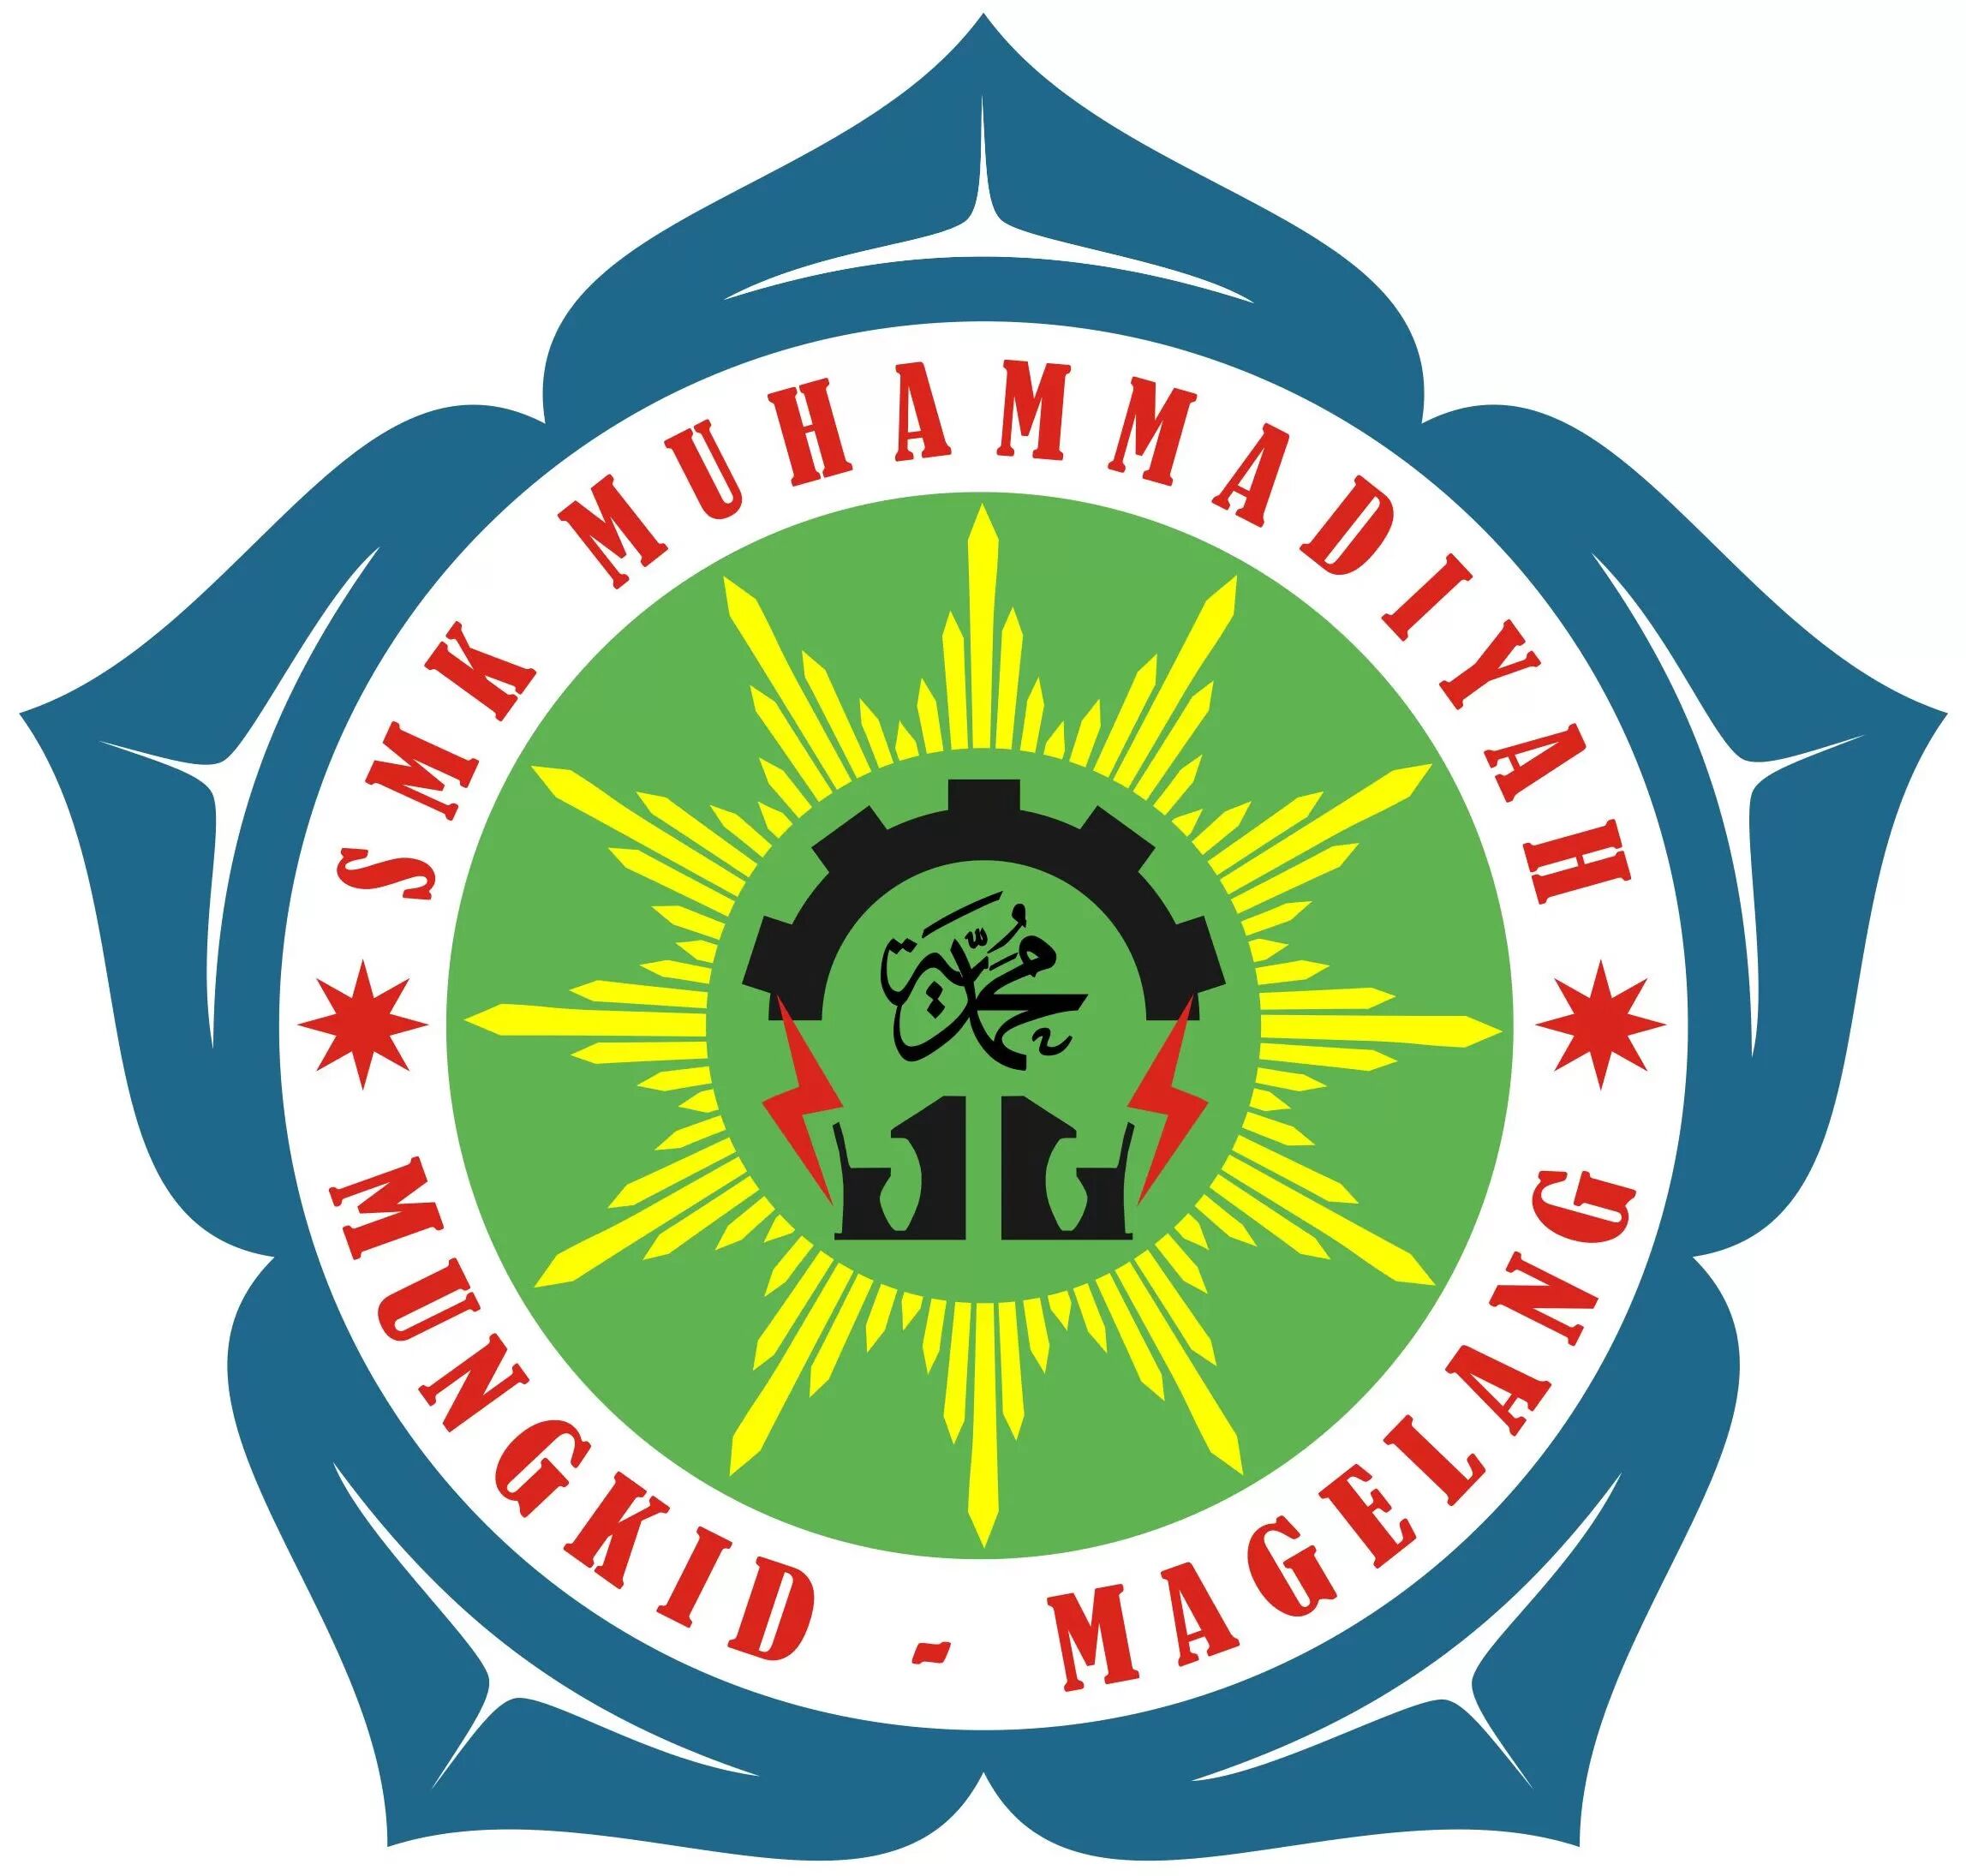 SMK Muhammadiyah Mungkid